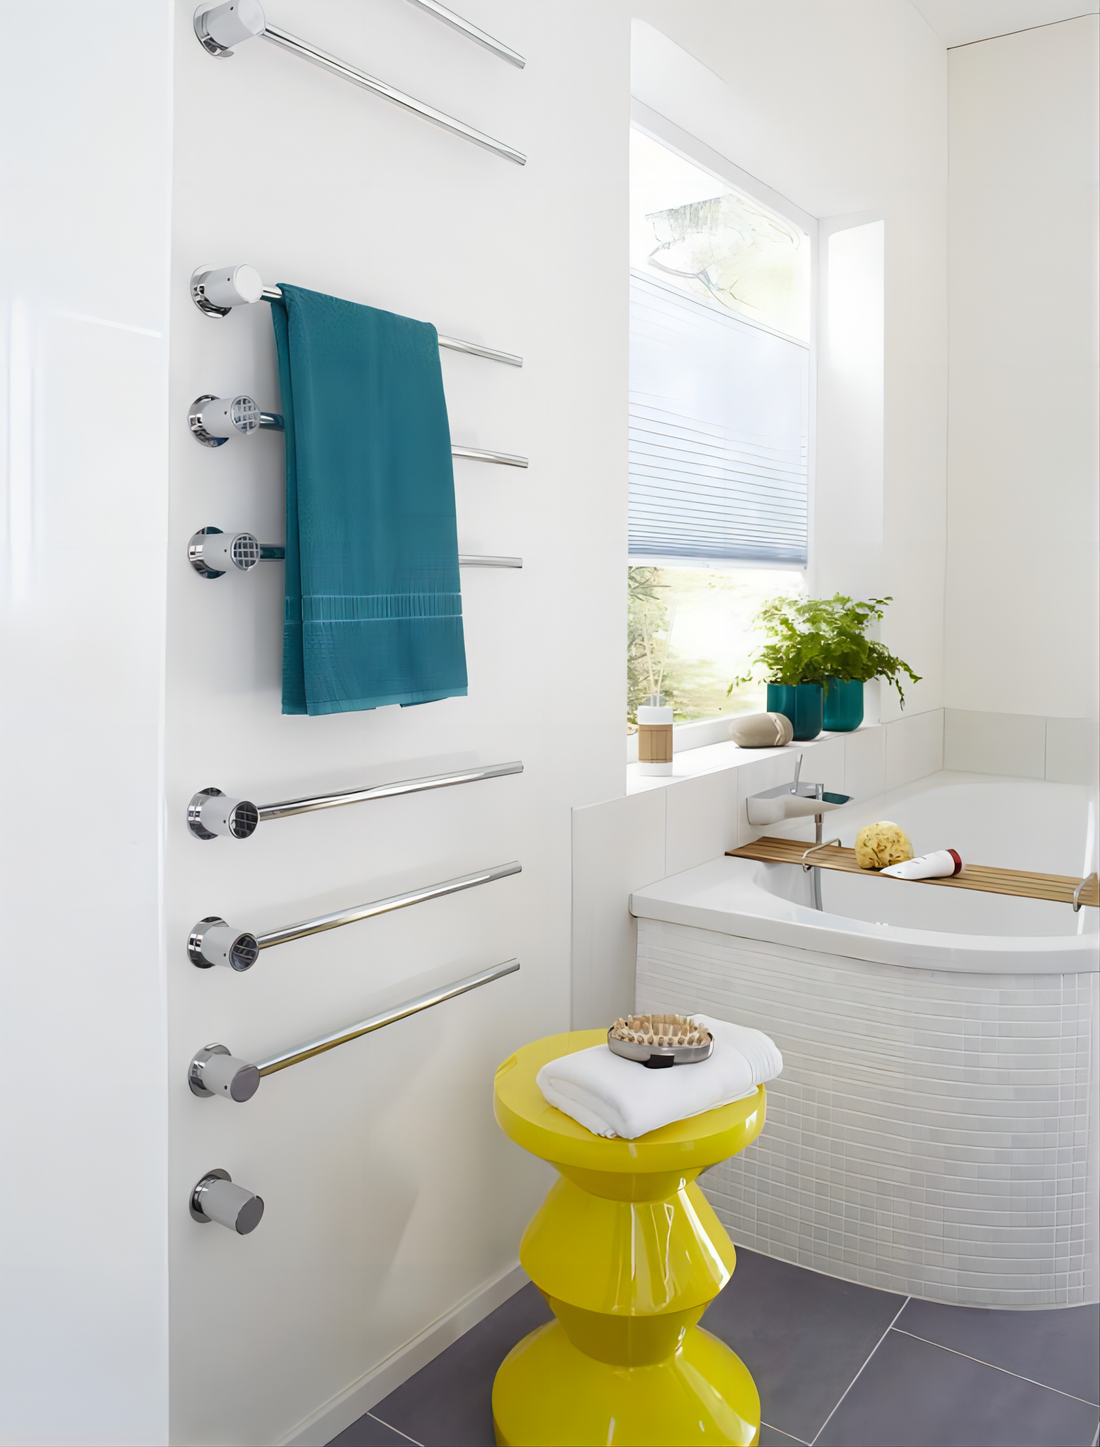 Luxurious Todattion towel warmer transforming a modern bathroom